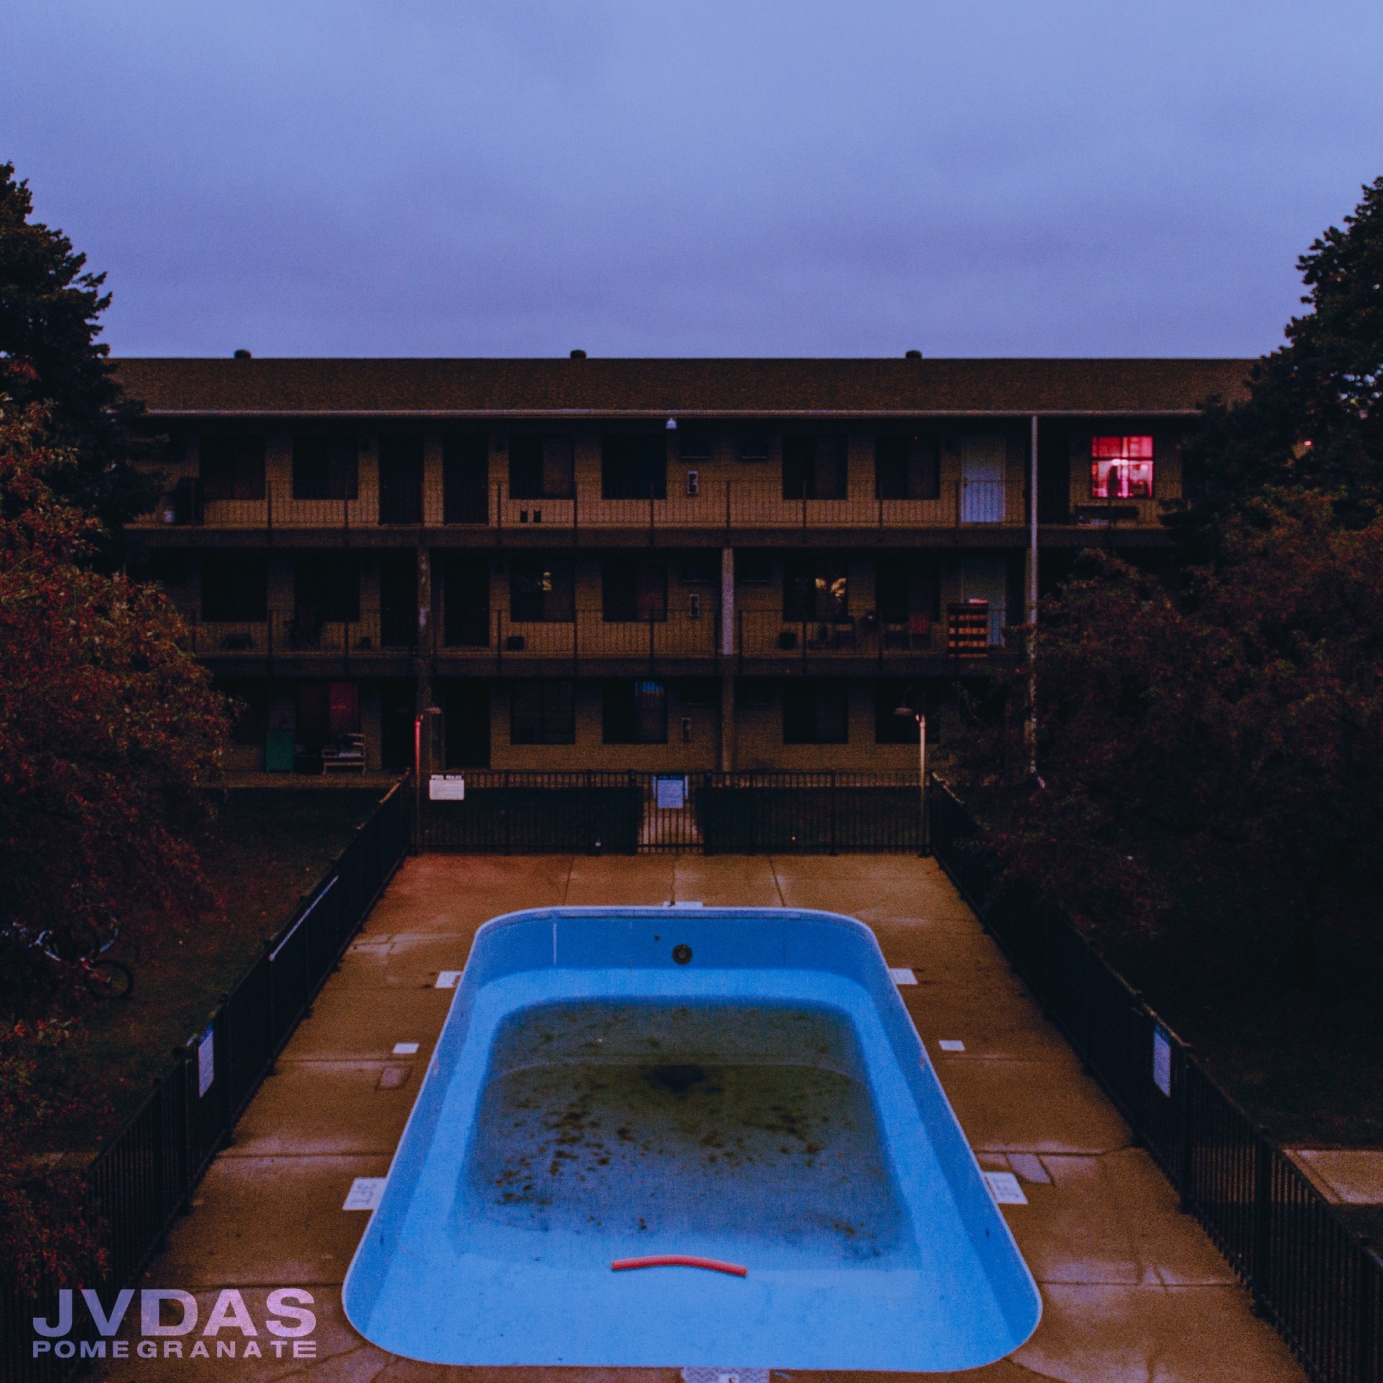 Jvdas - Pomegranate (EP)